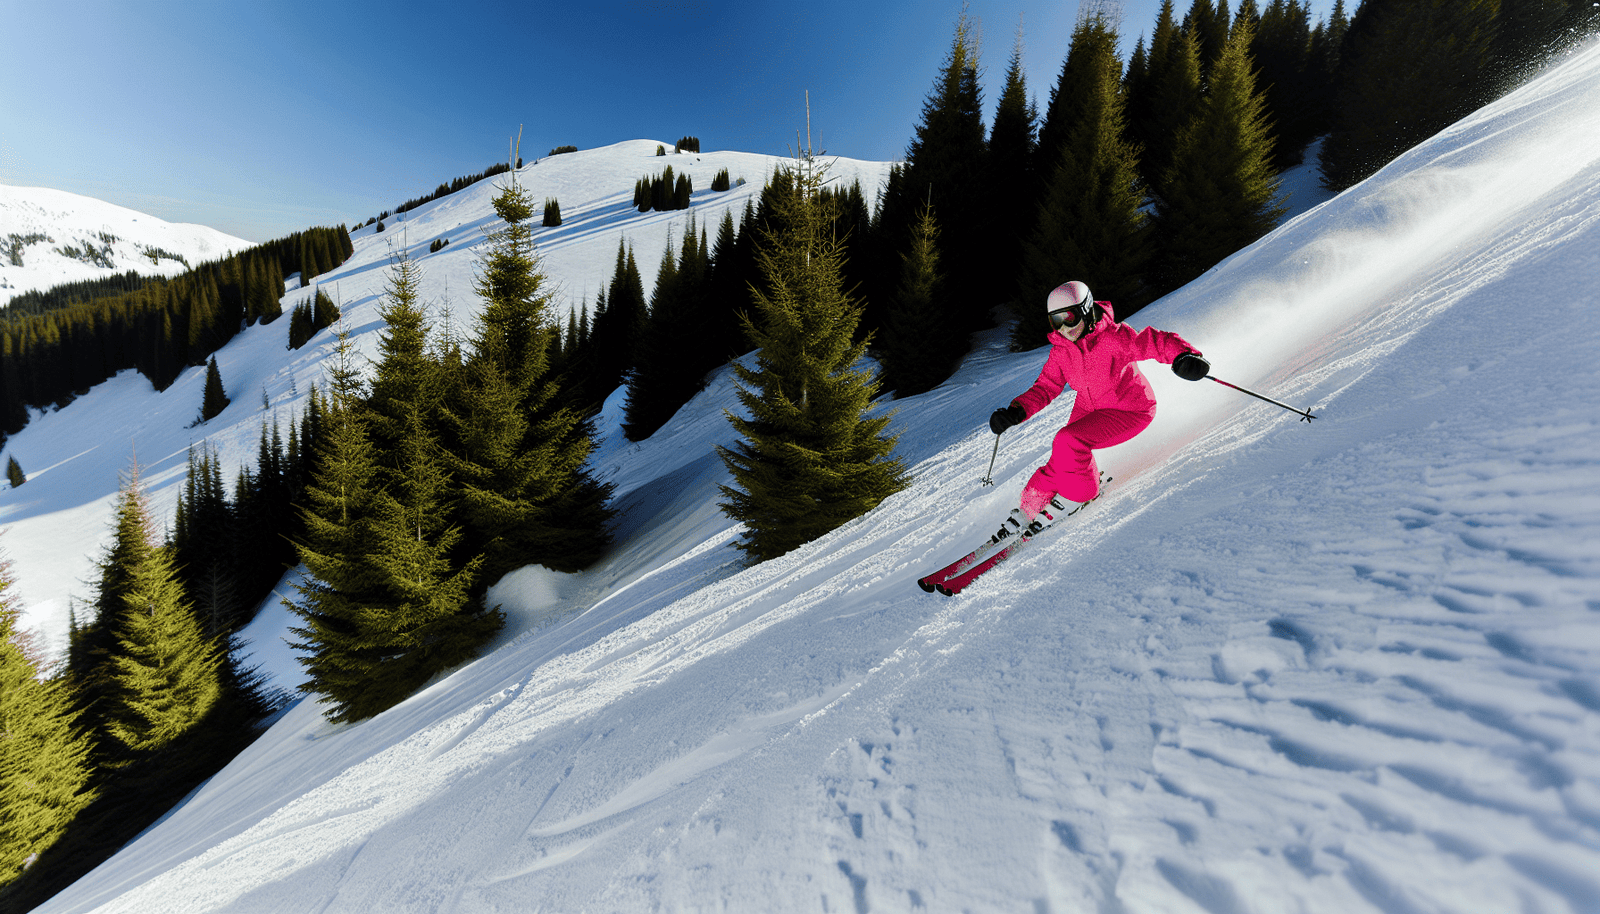 Intermediate skier skiing in challenging terrain